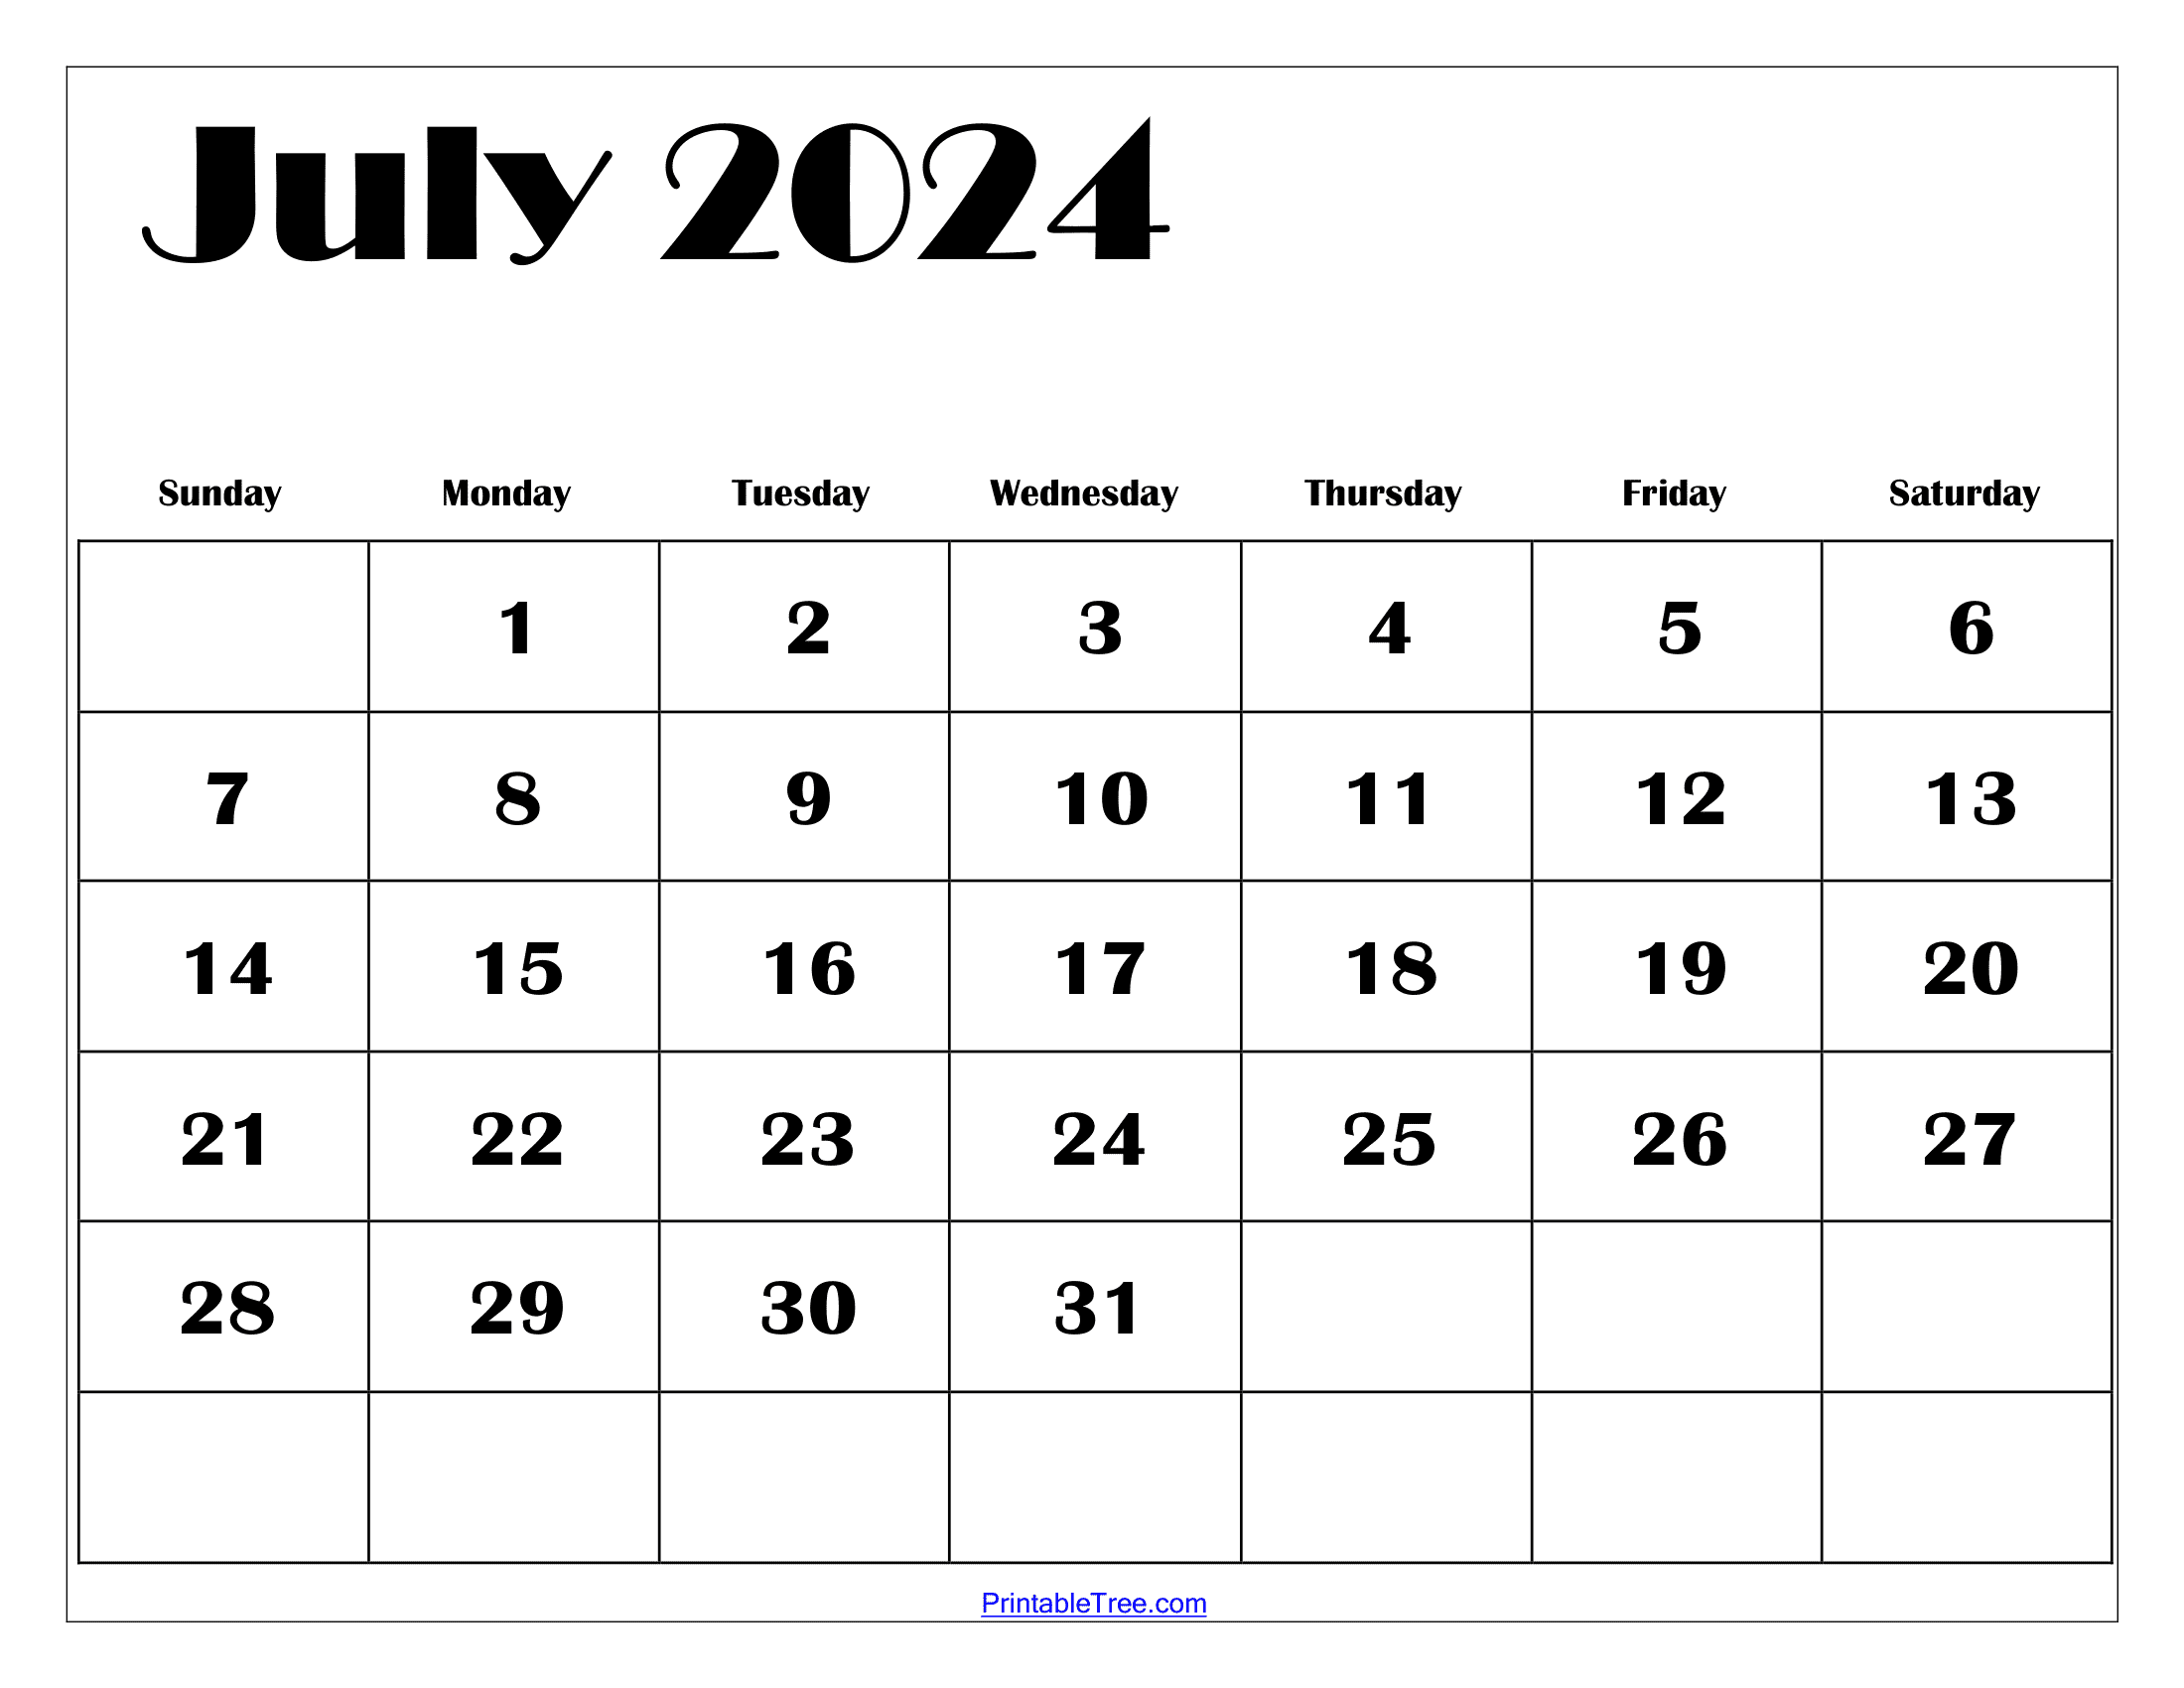 July 2024 Calendar Printable Pdf With Holidays Free Template for Monthly Calendar Printable July 2024